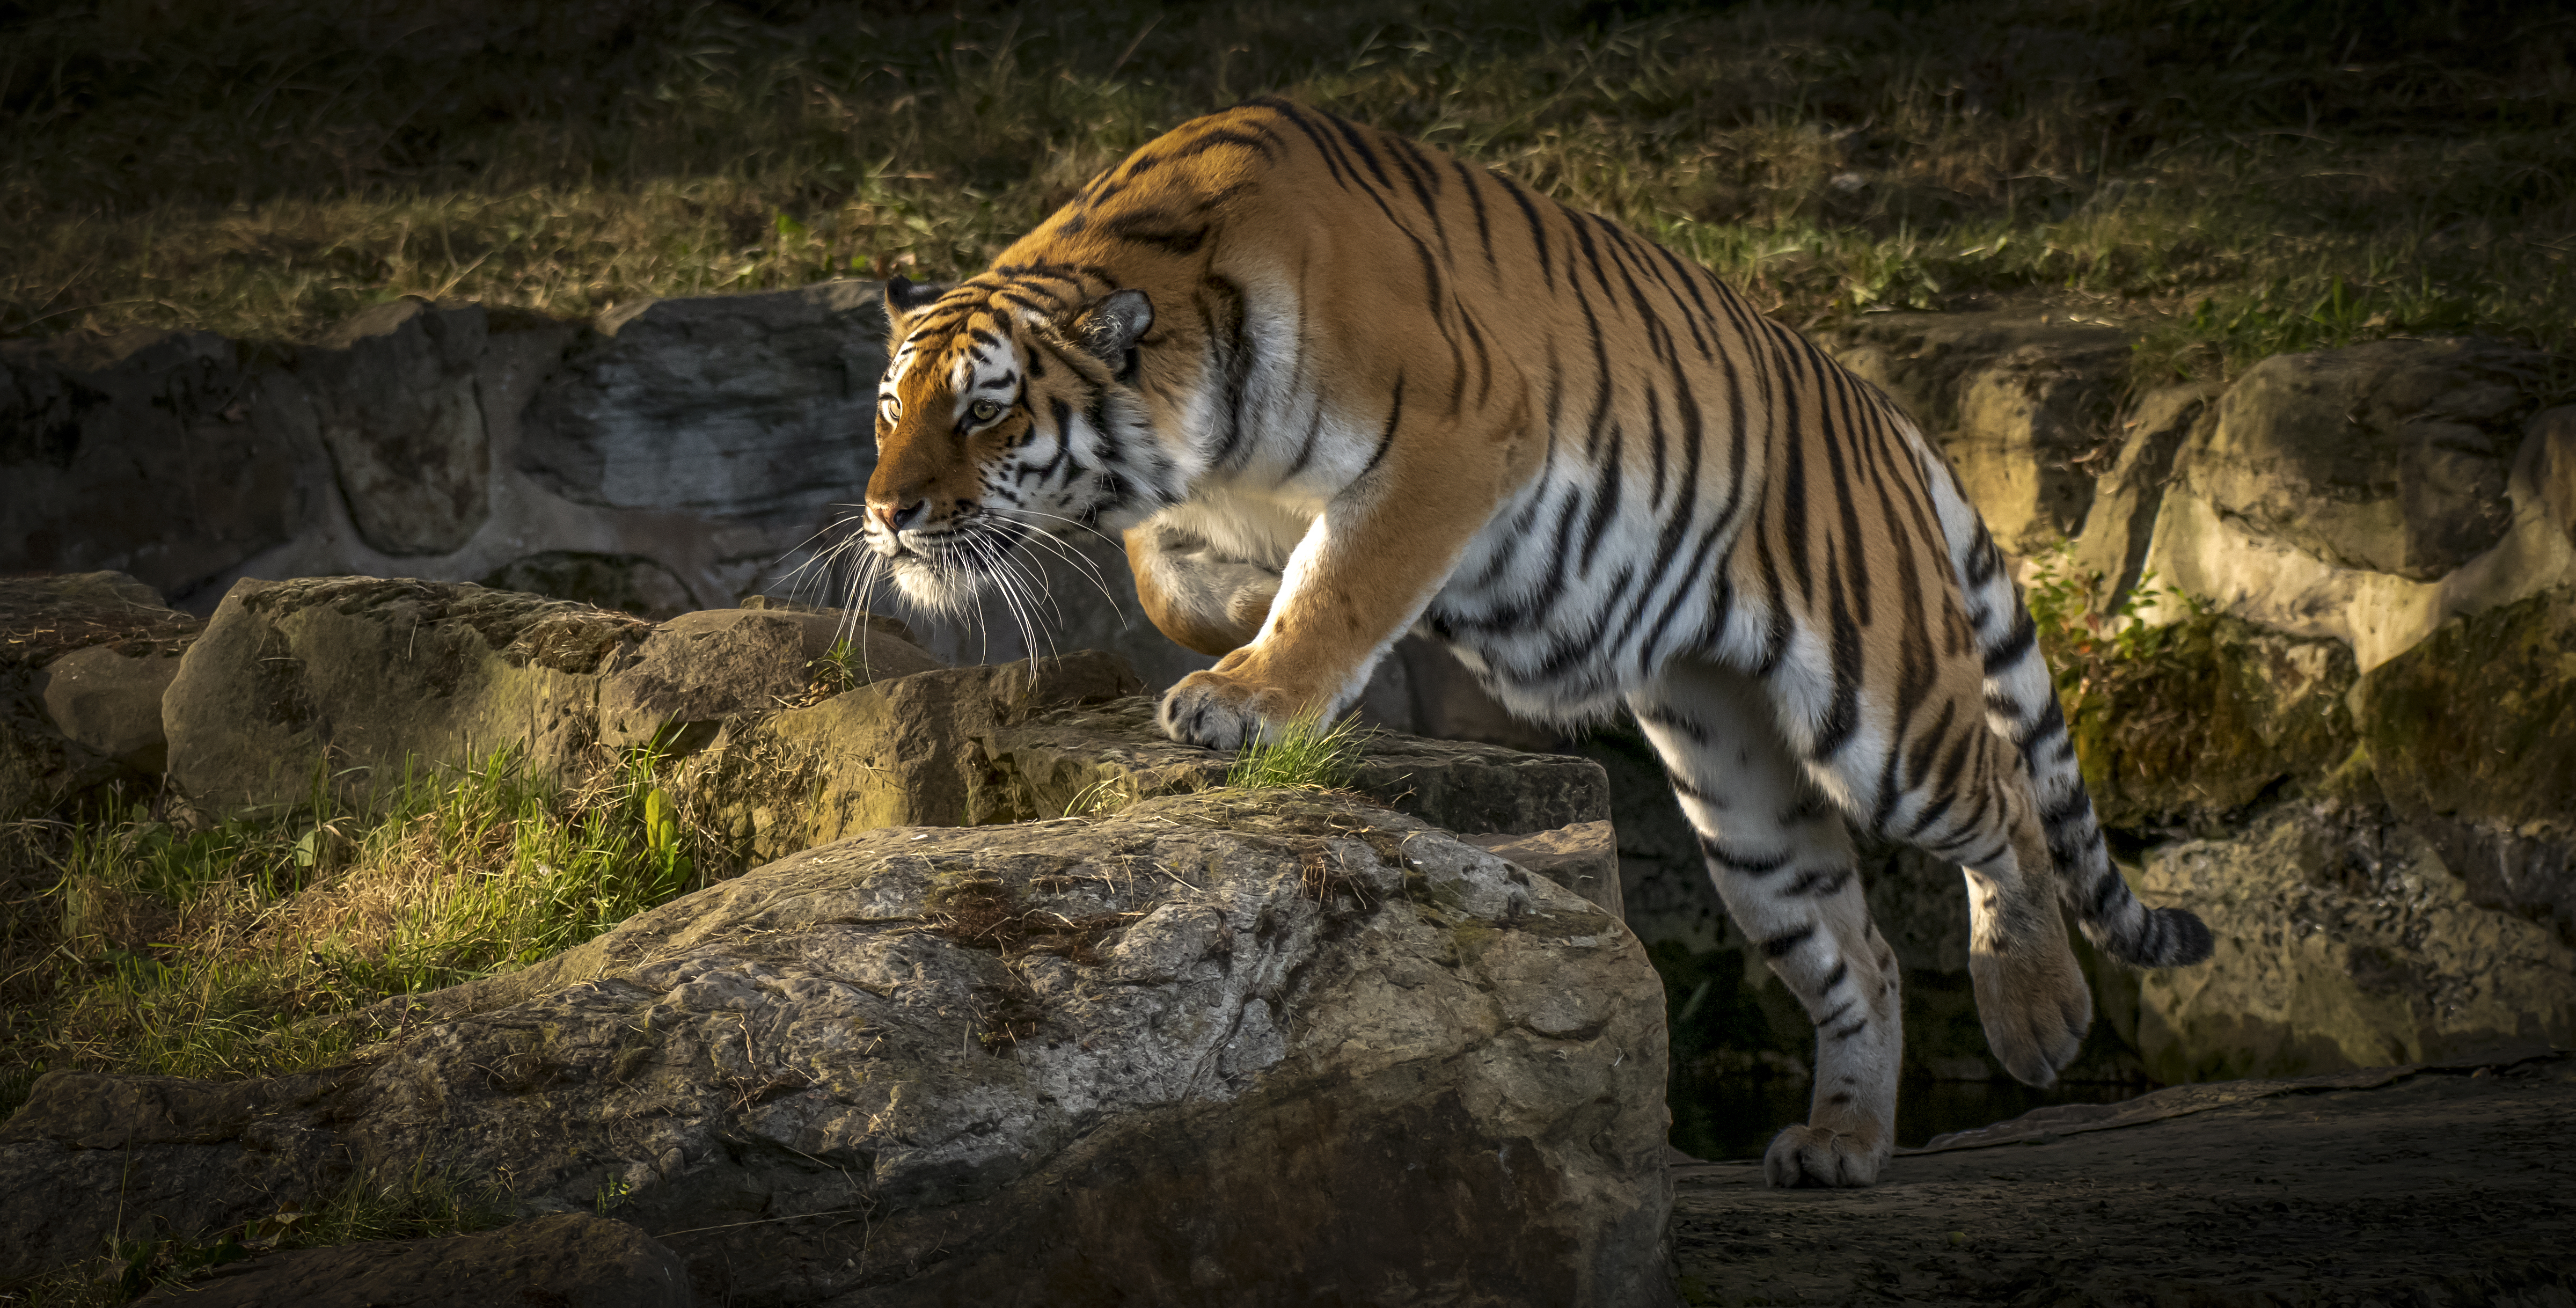 Animal picture, Amur tiger on the desktop